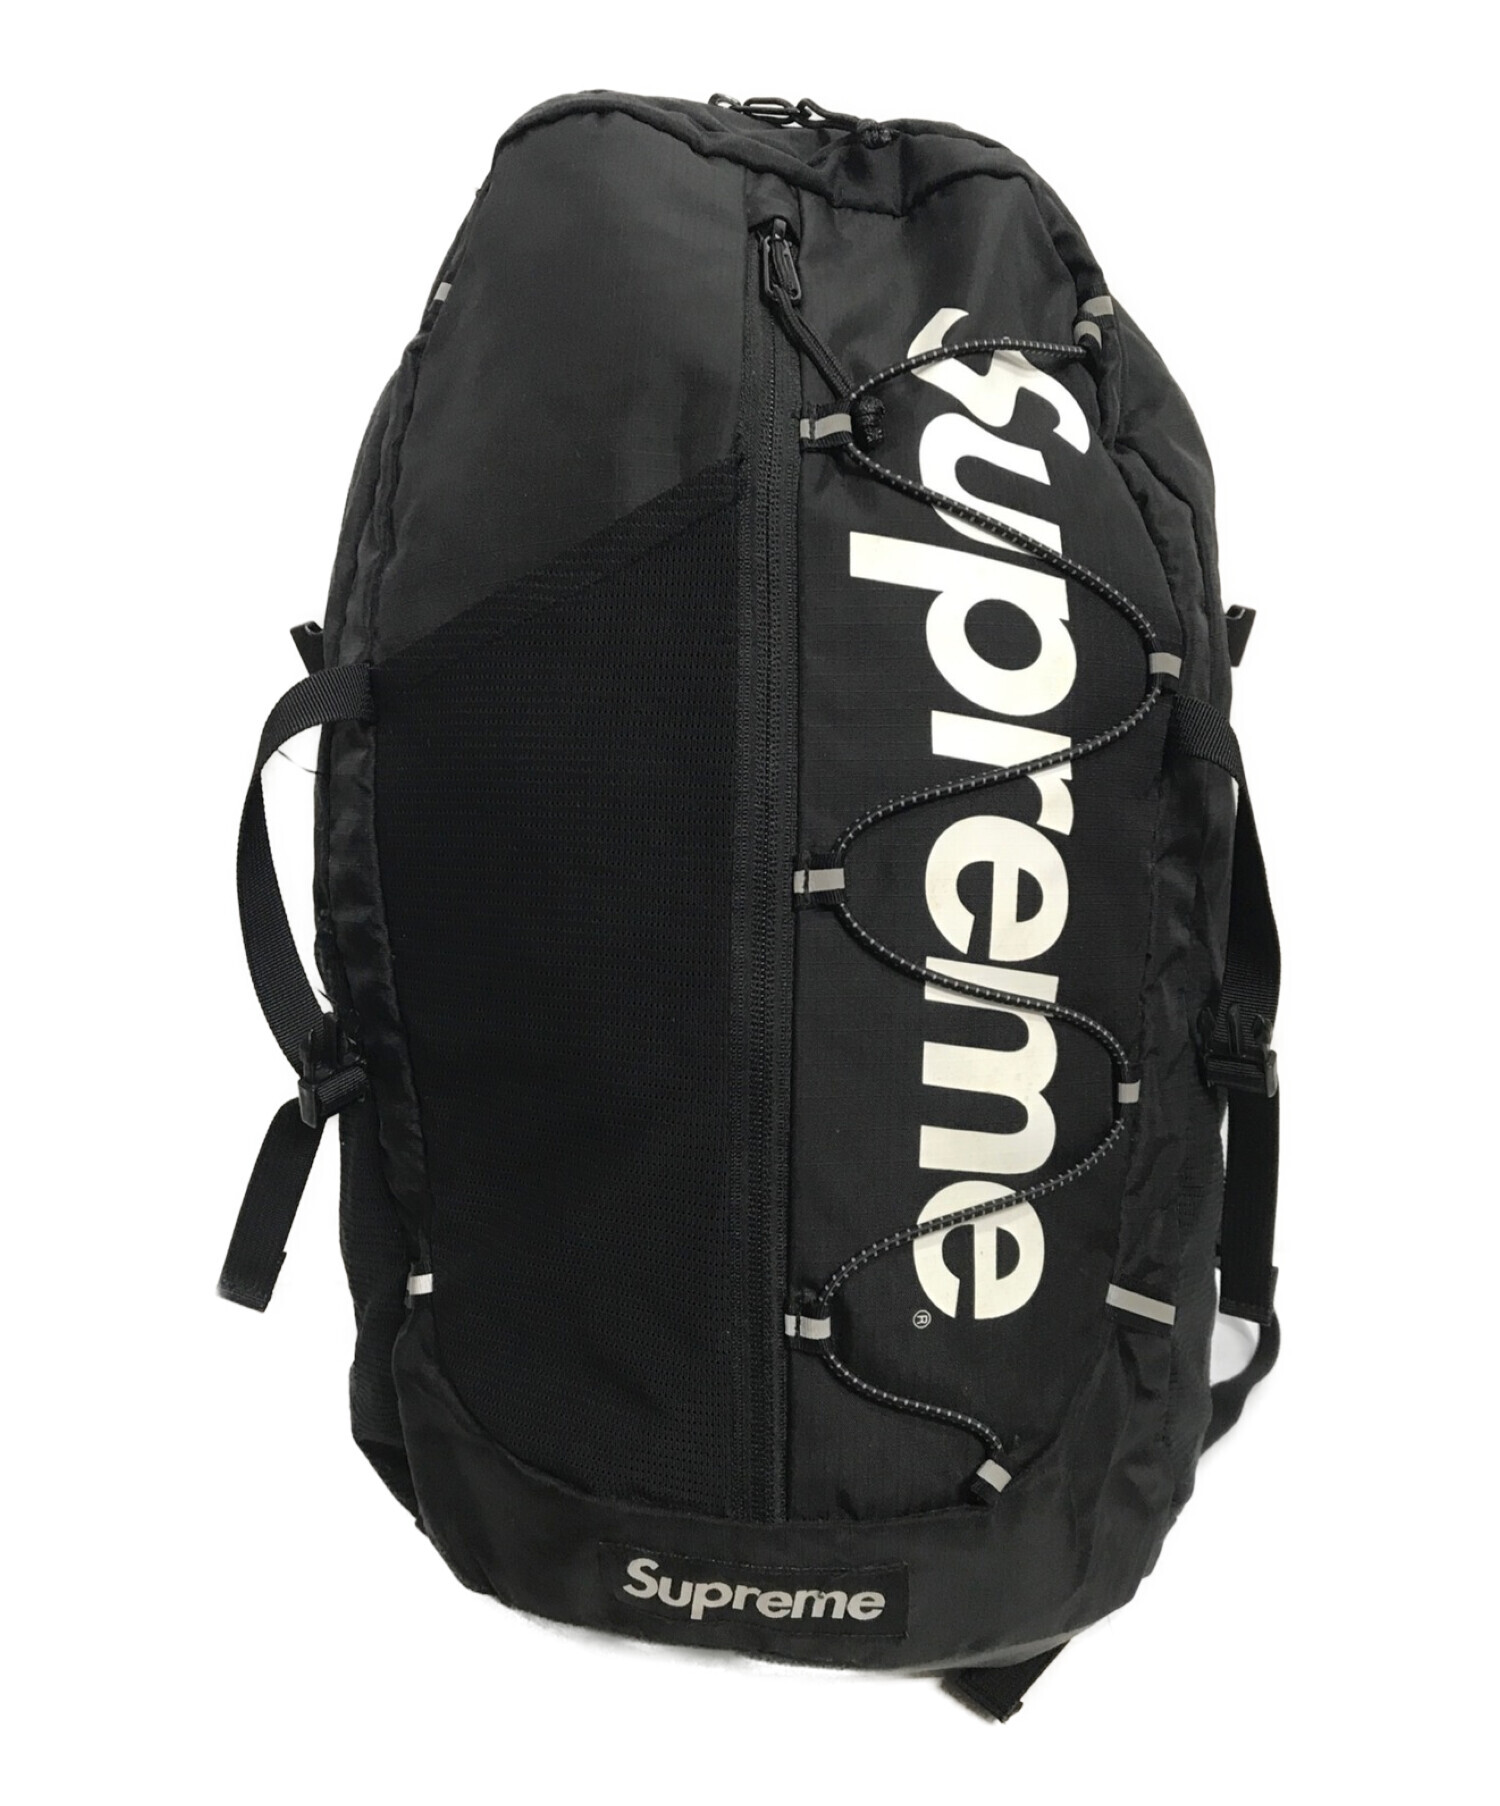 Supreme (シュプリーム) 17SS Backpack ブラック